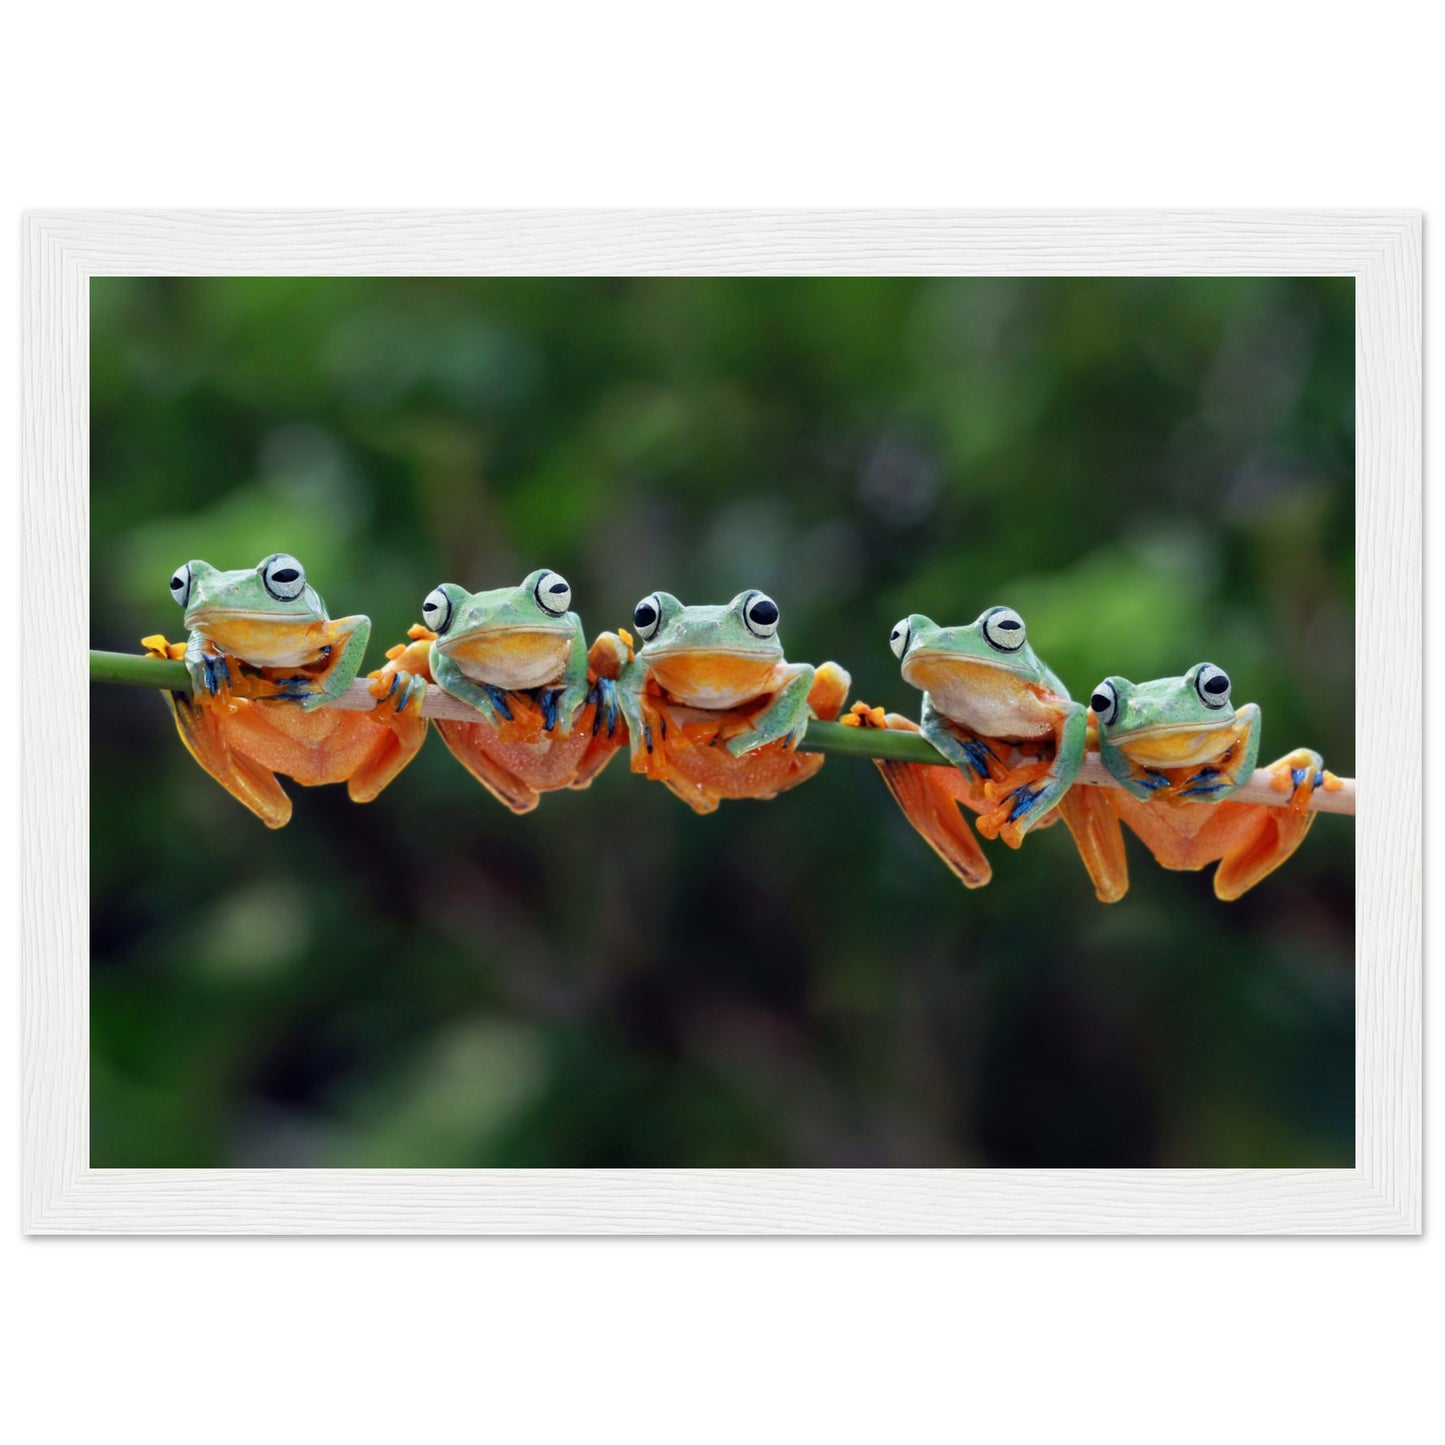 Tree frogs